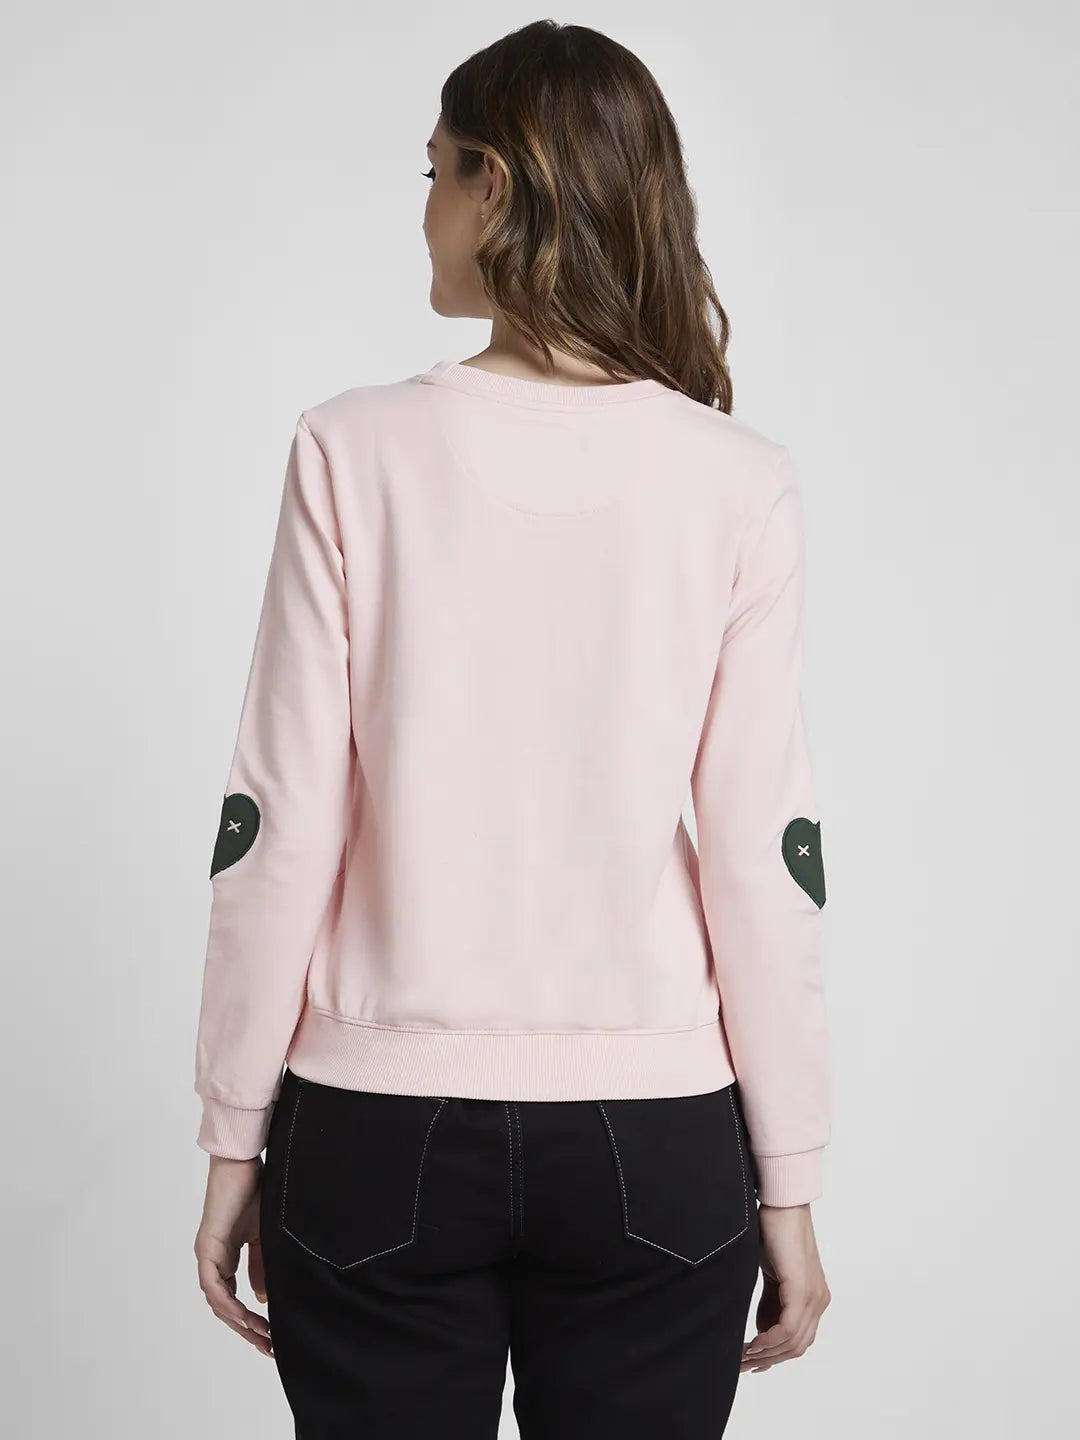 Spykar Women Baby Pink Blended Regular FIt Round Neck Printed Sweatshirt